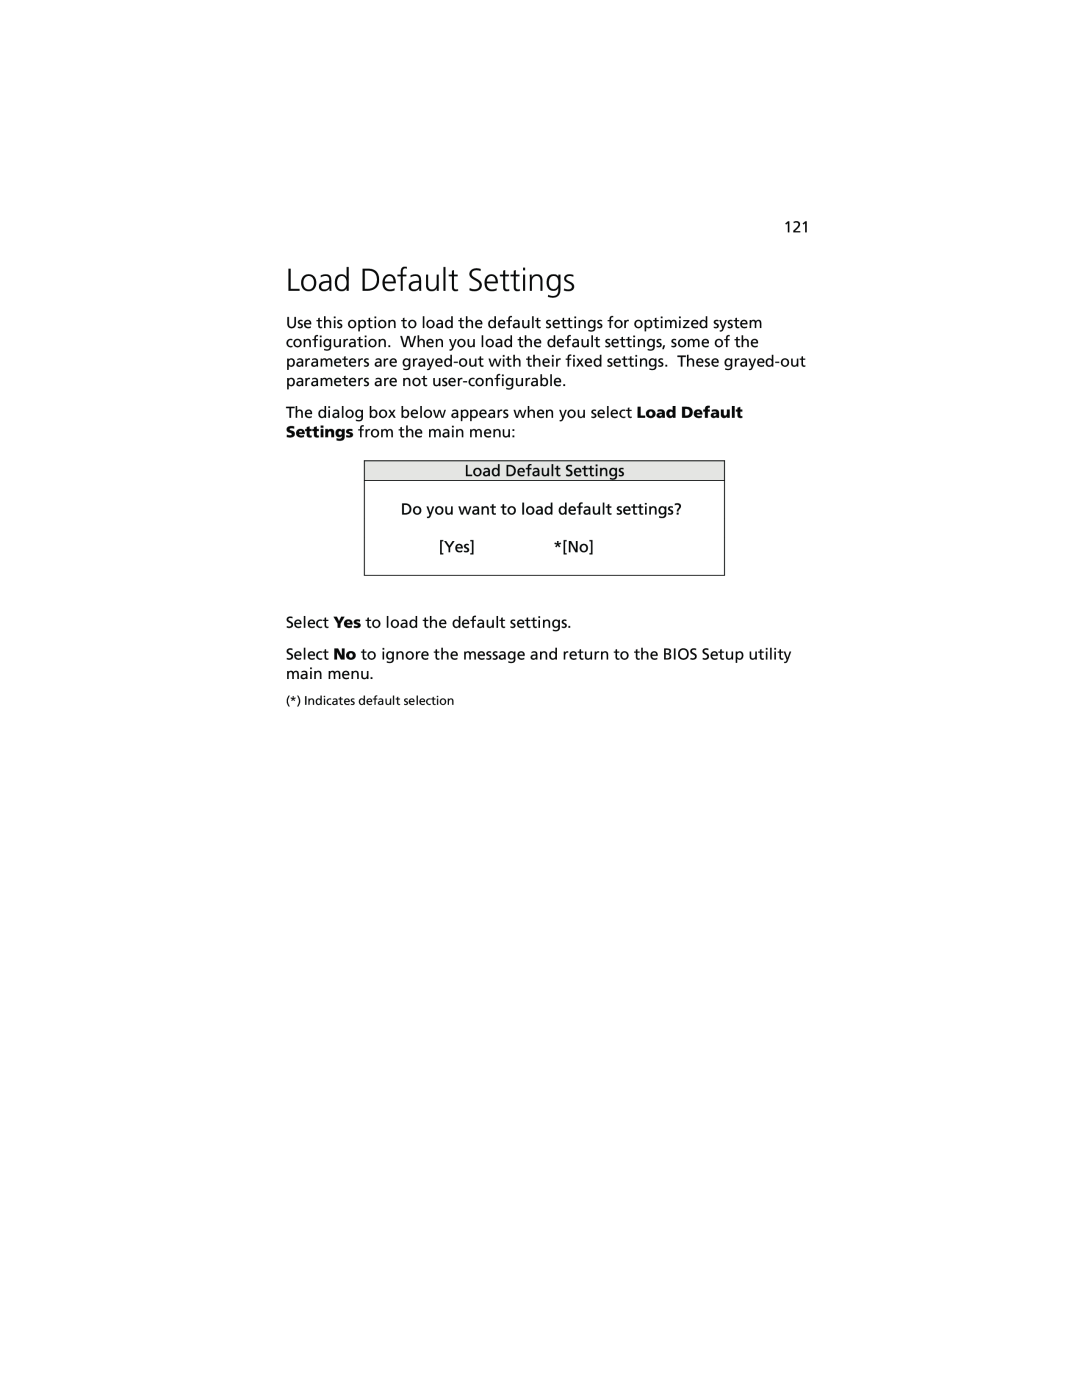 Acer Altos G610 manual Load Default Settings, Indicates default selection 